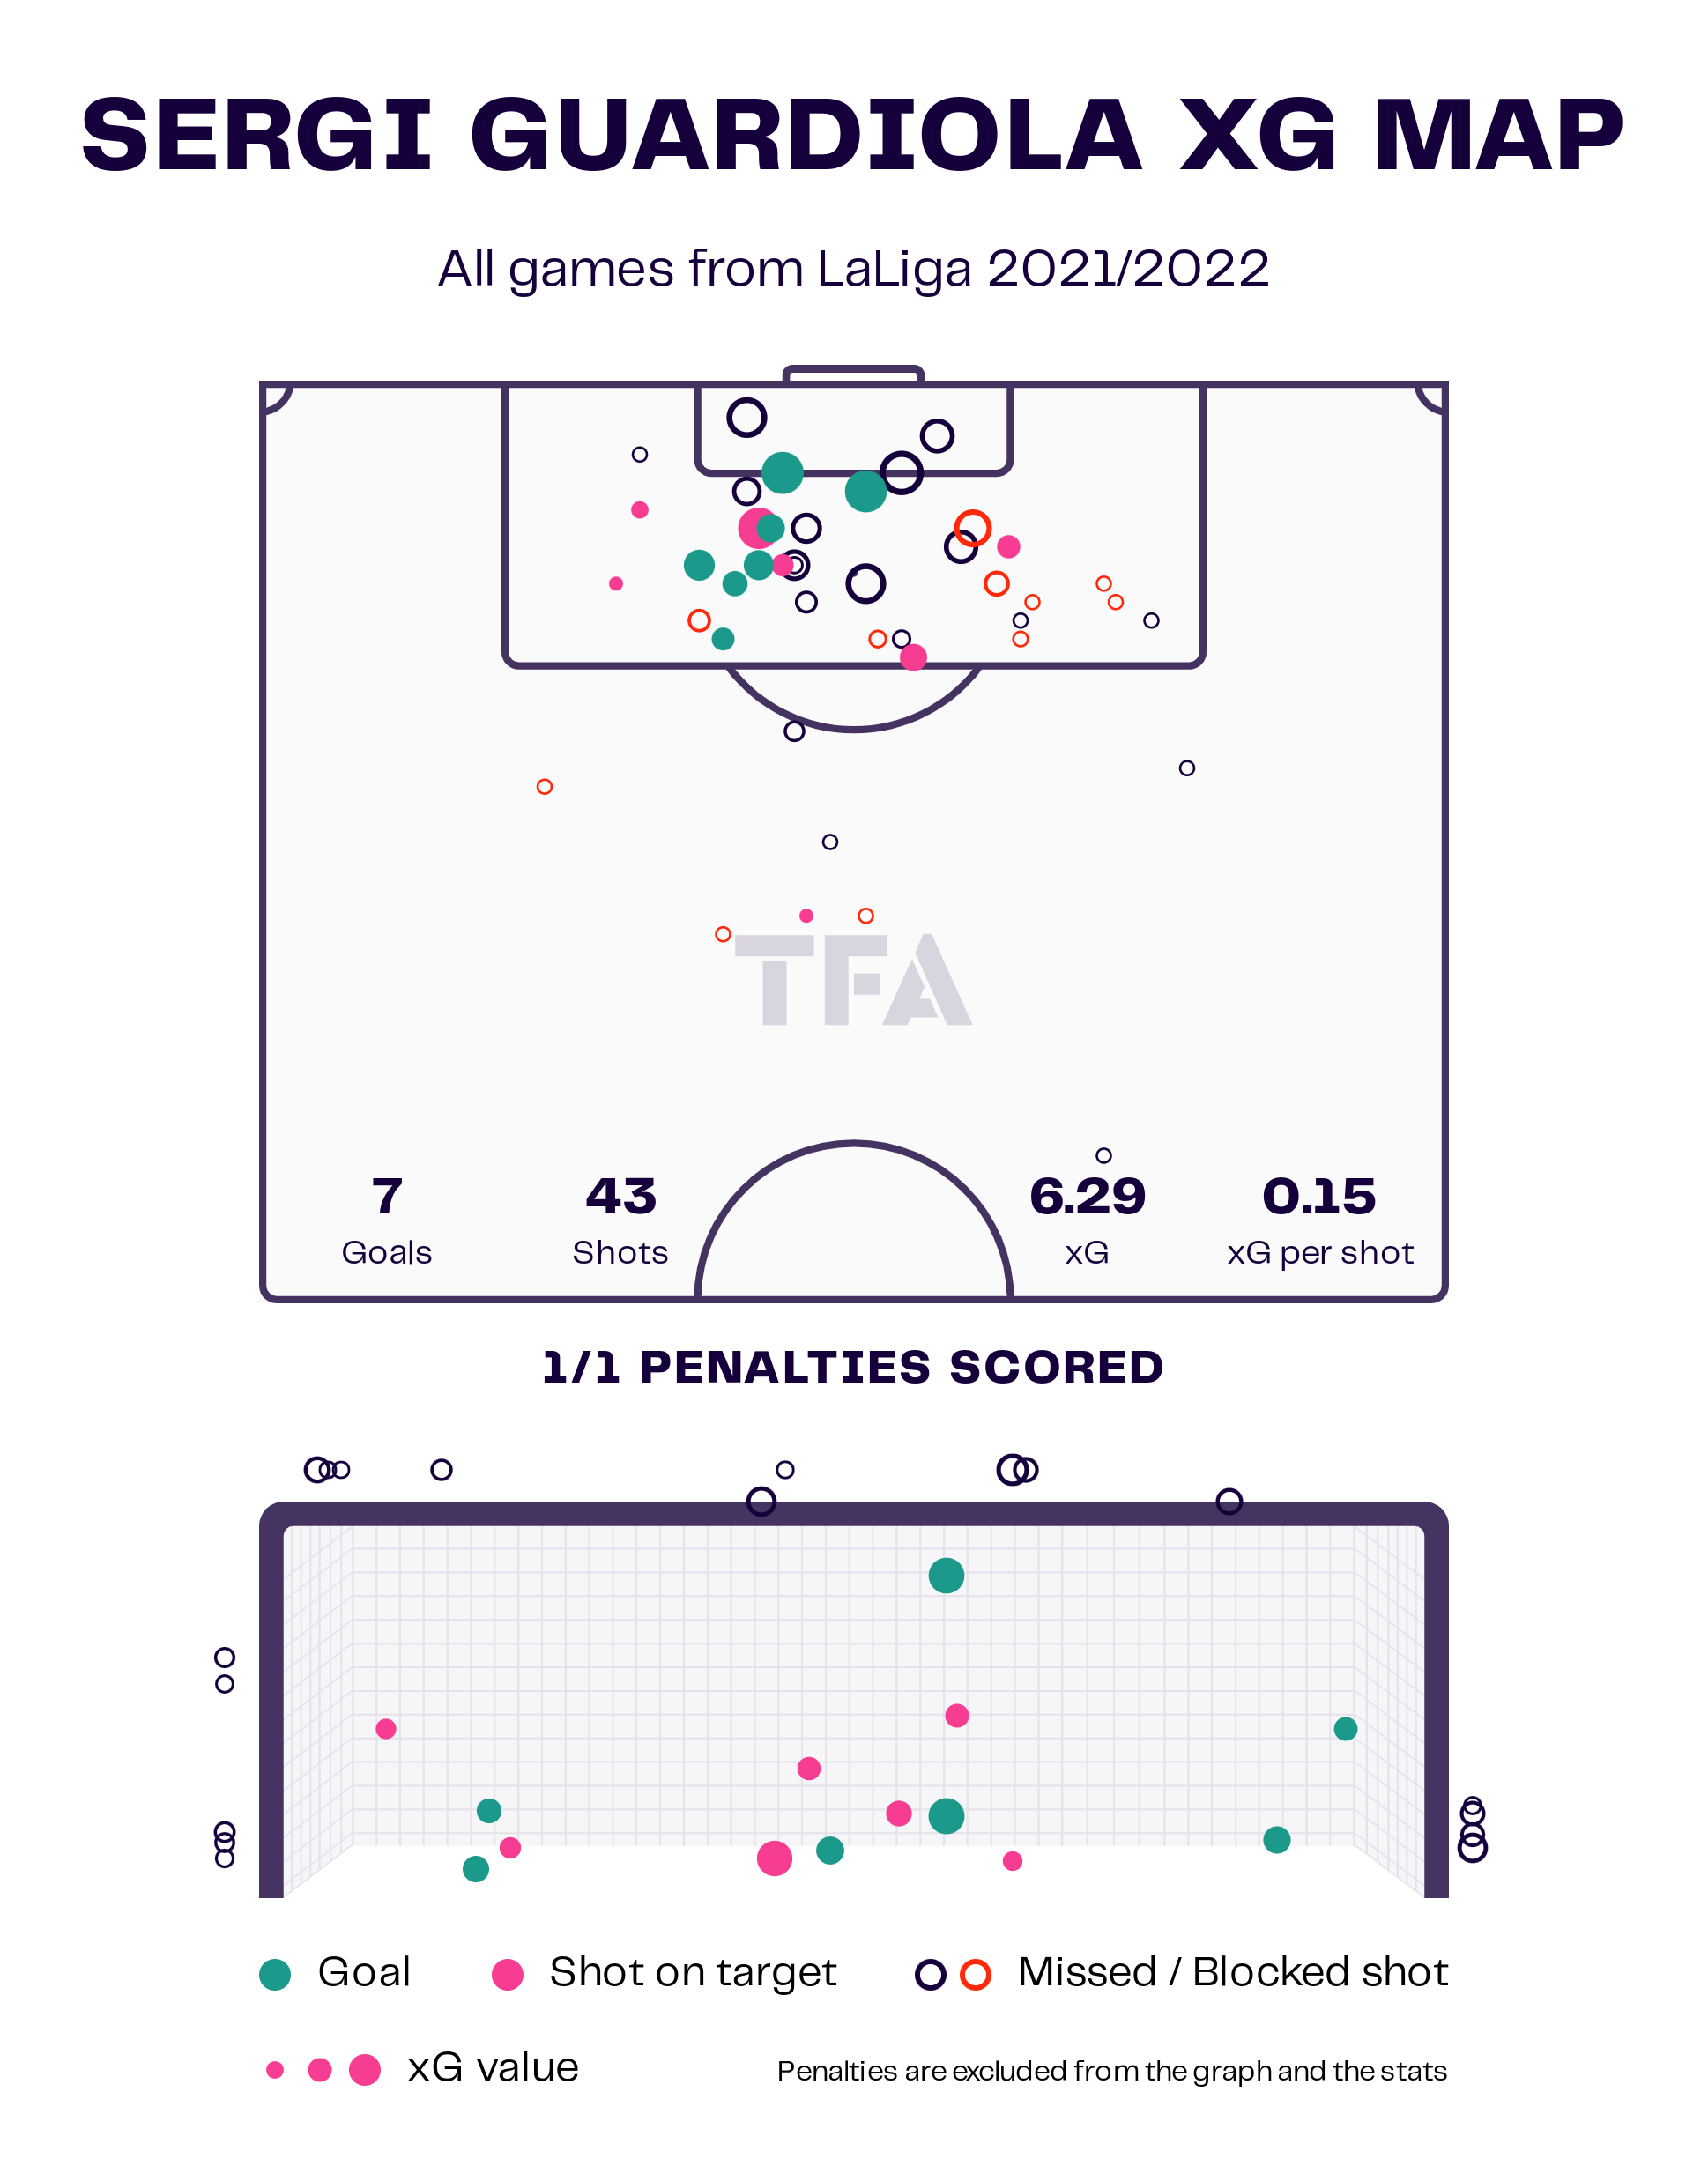 Sergio Guardiola - Cadiz: La Liga 2022/23 data, statistics, analysis and scouting report